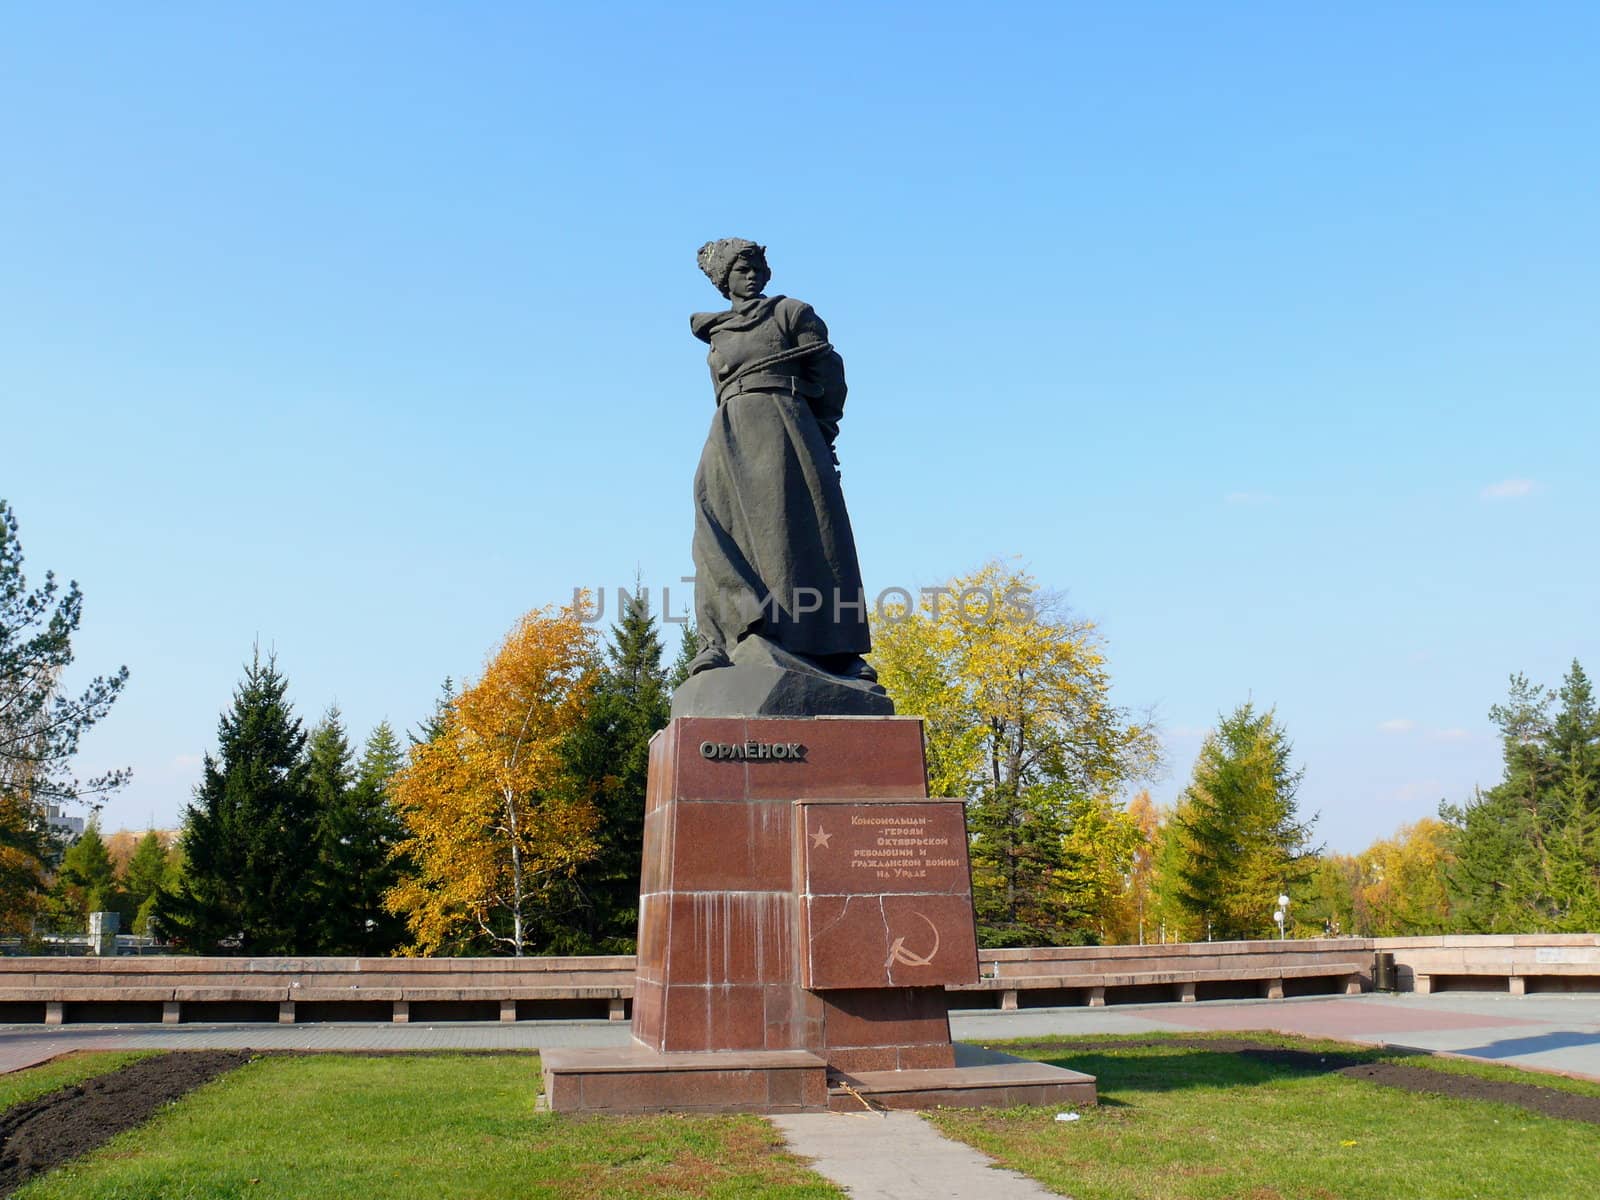 Monument "Orlenok" in "Aloe pole" square - Chtlyabinsk